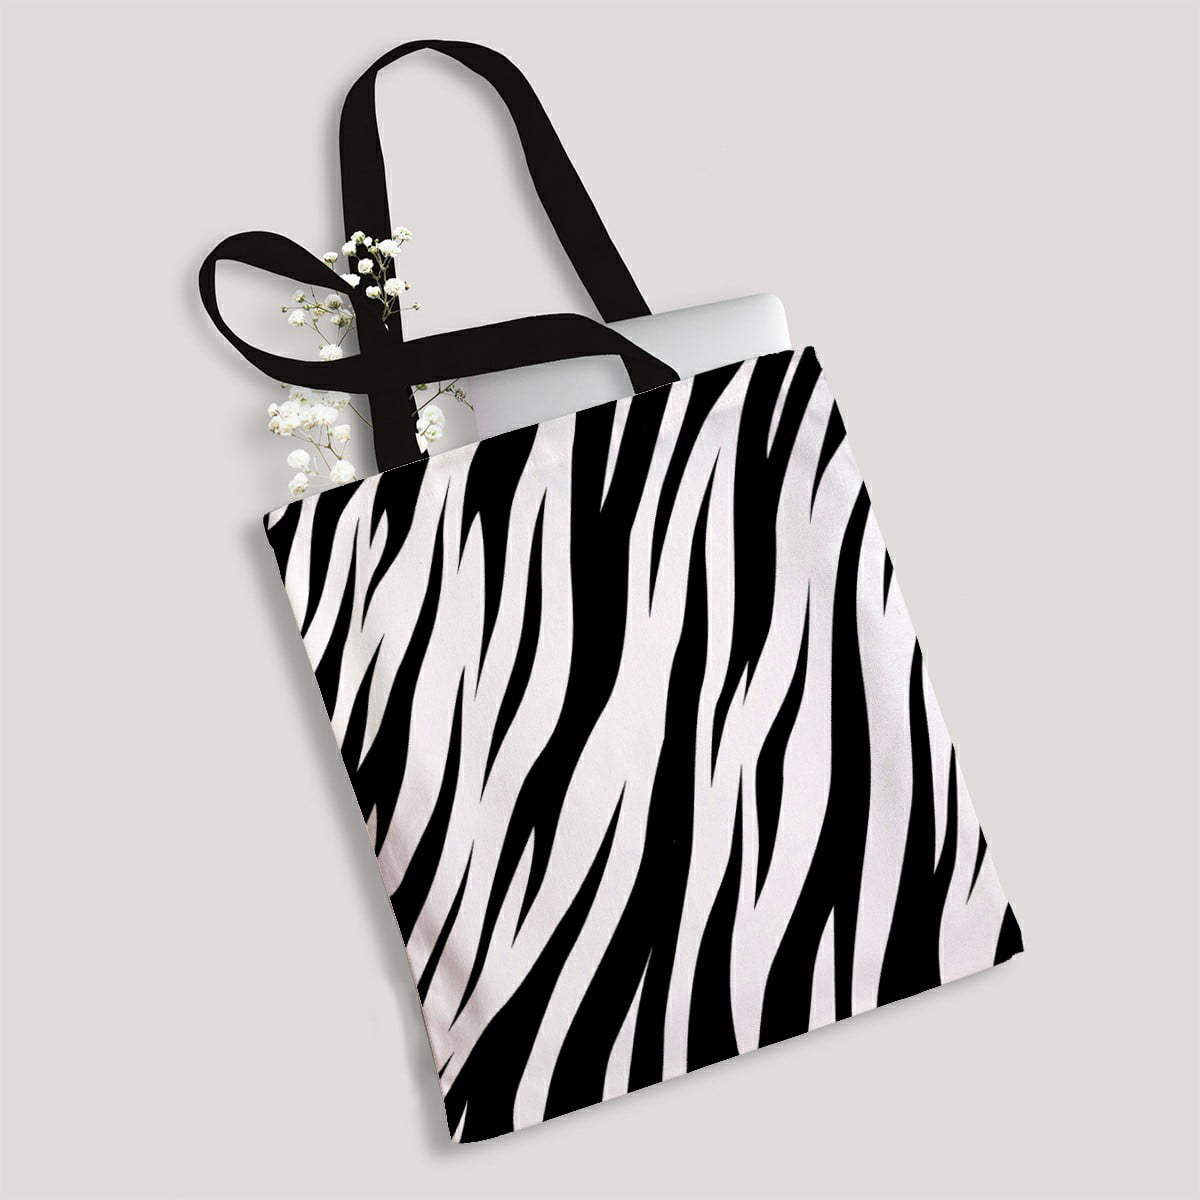 Tiger Canvas Shopping Bag  Shopping Bag tote bag  Shopping Bag  Grocery Bag  Market Bag  Grocery Bag  Reusable Bag  Grocery Sack